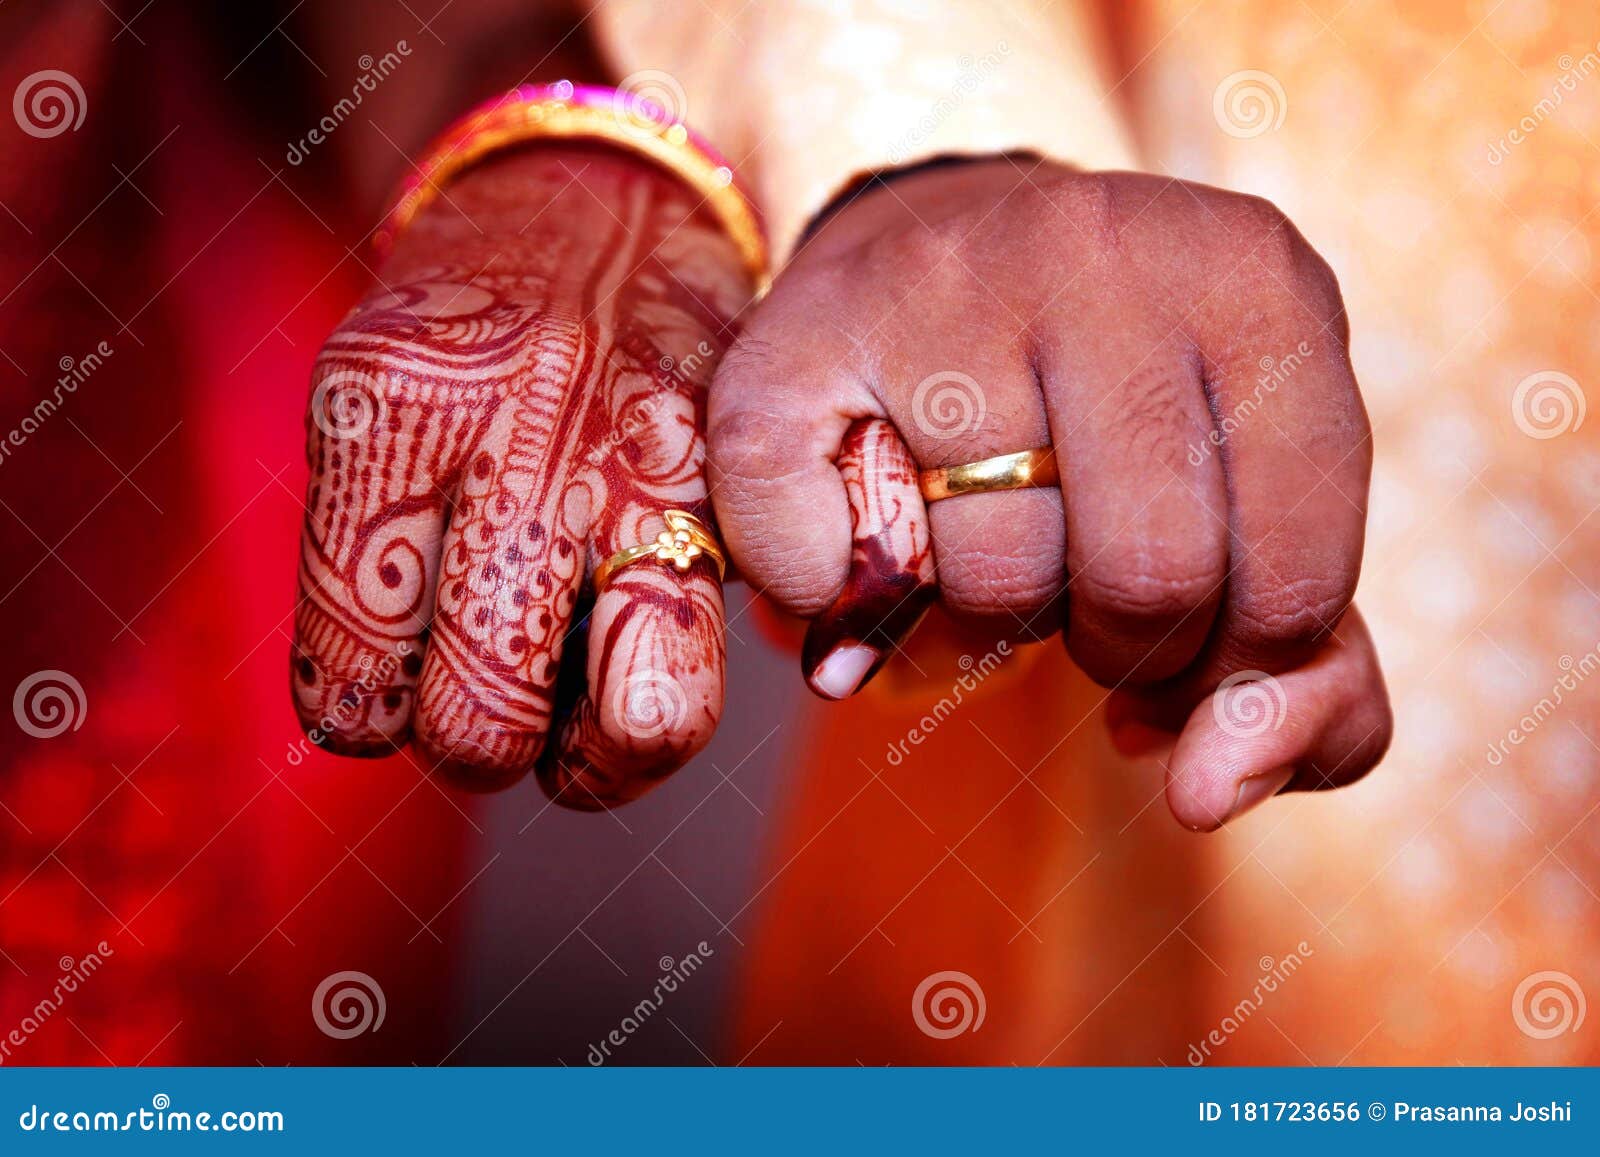 Romantic Couple Kissing Hand Wedding Pose Wallpaper 27575 - Baltana